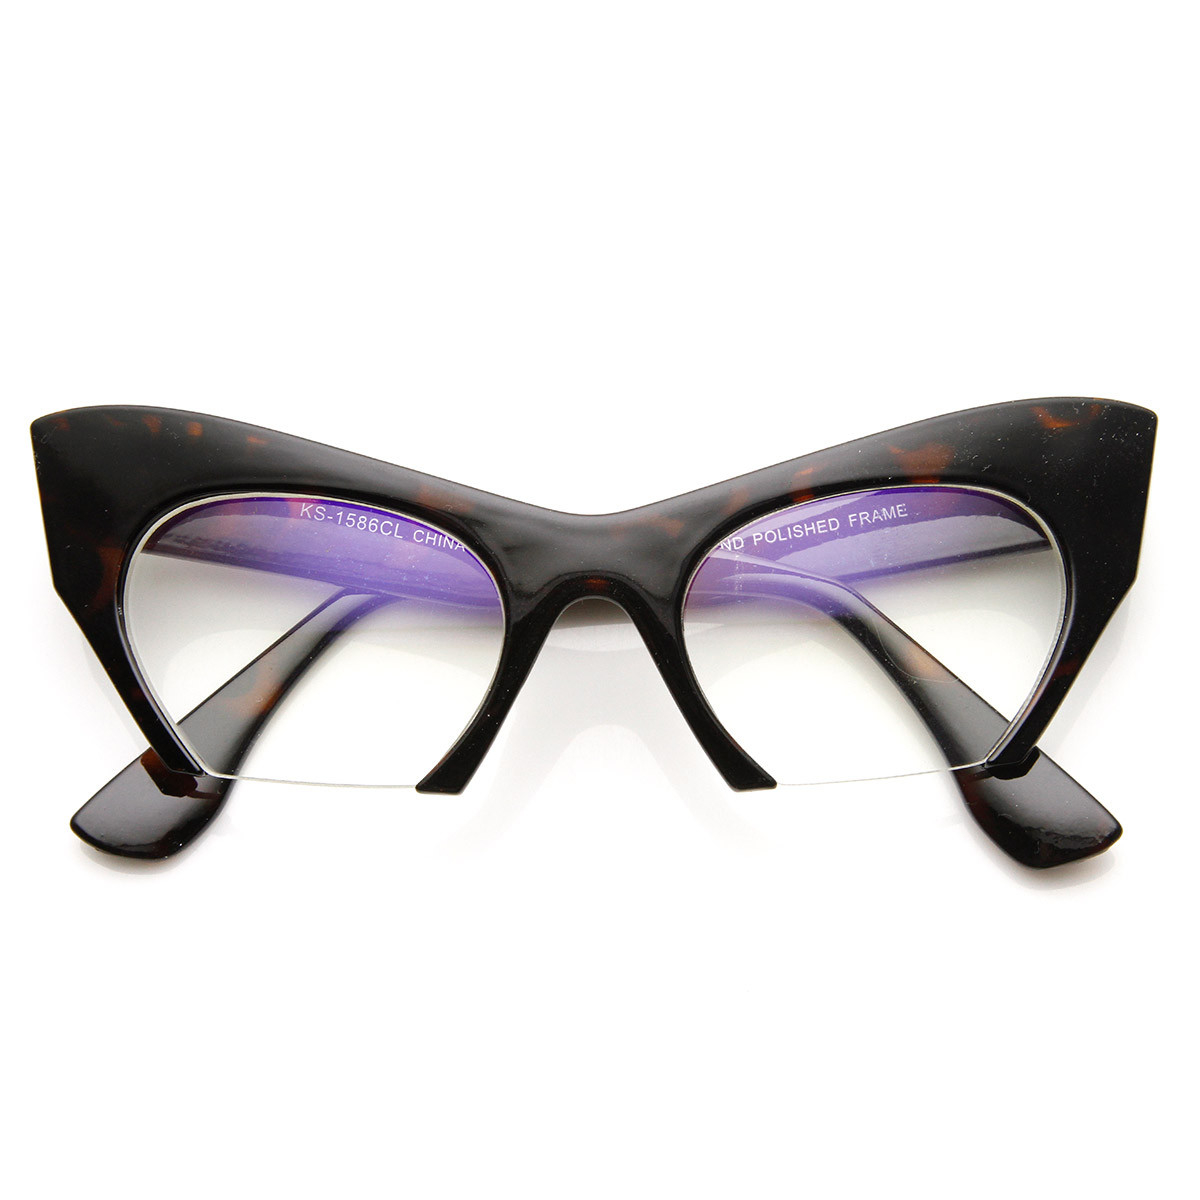 Women's High Fashion Semi-Rimless Clear Lens Cat Eye Glasses - Black